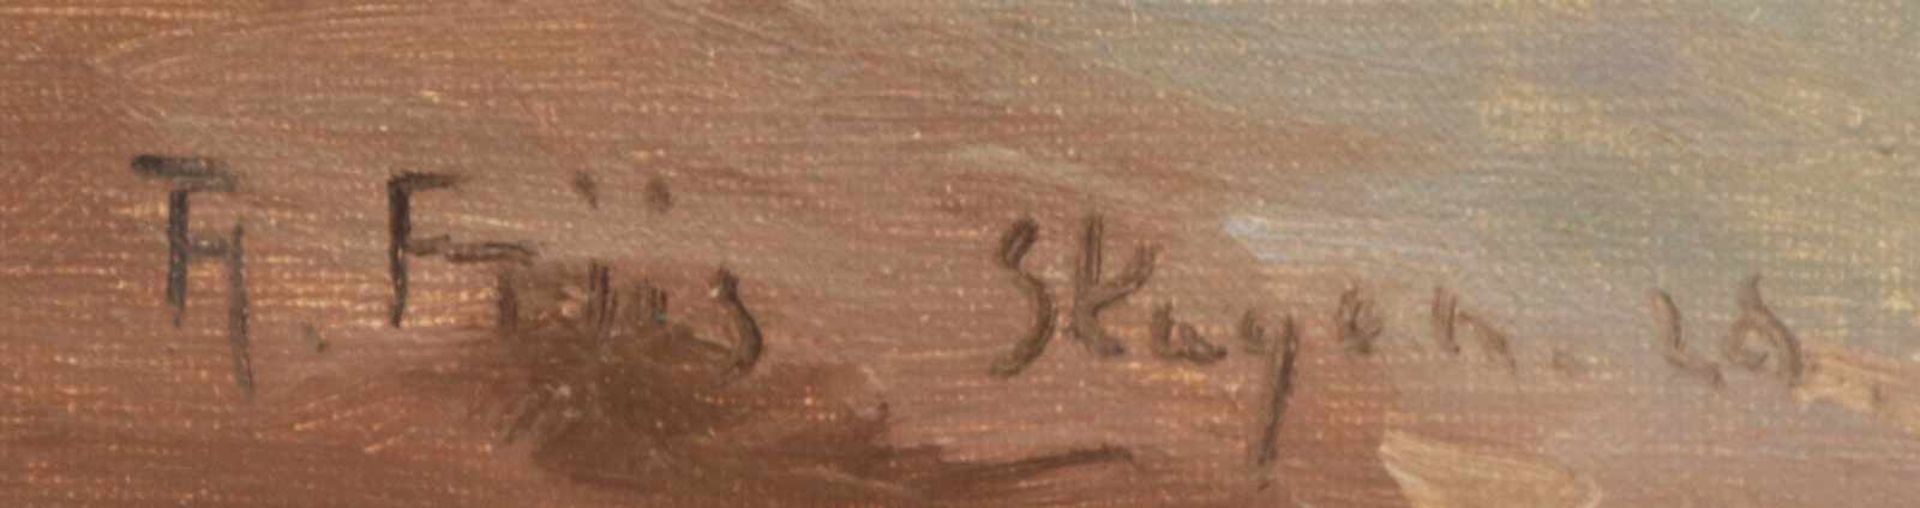 THEODOR FRIIS (1879-1959, dänischer Maler) Öl auf Leinwand, ¨Damen am Strand¨, unten rechts - Bild 2 aus 2